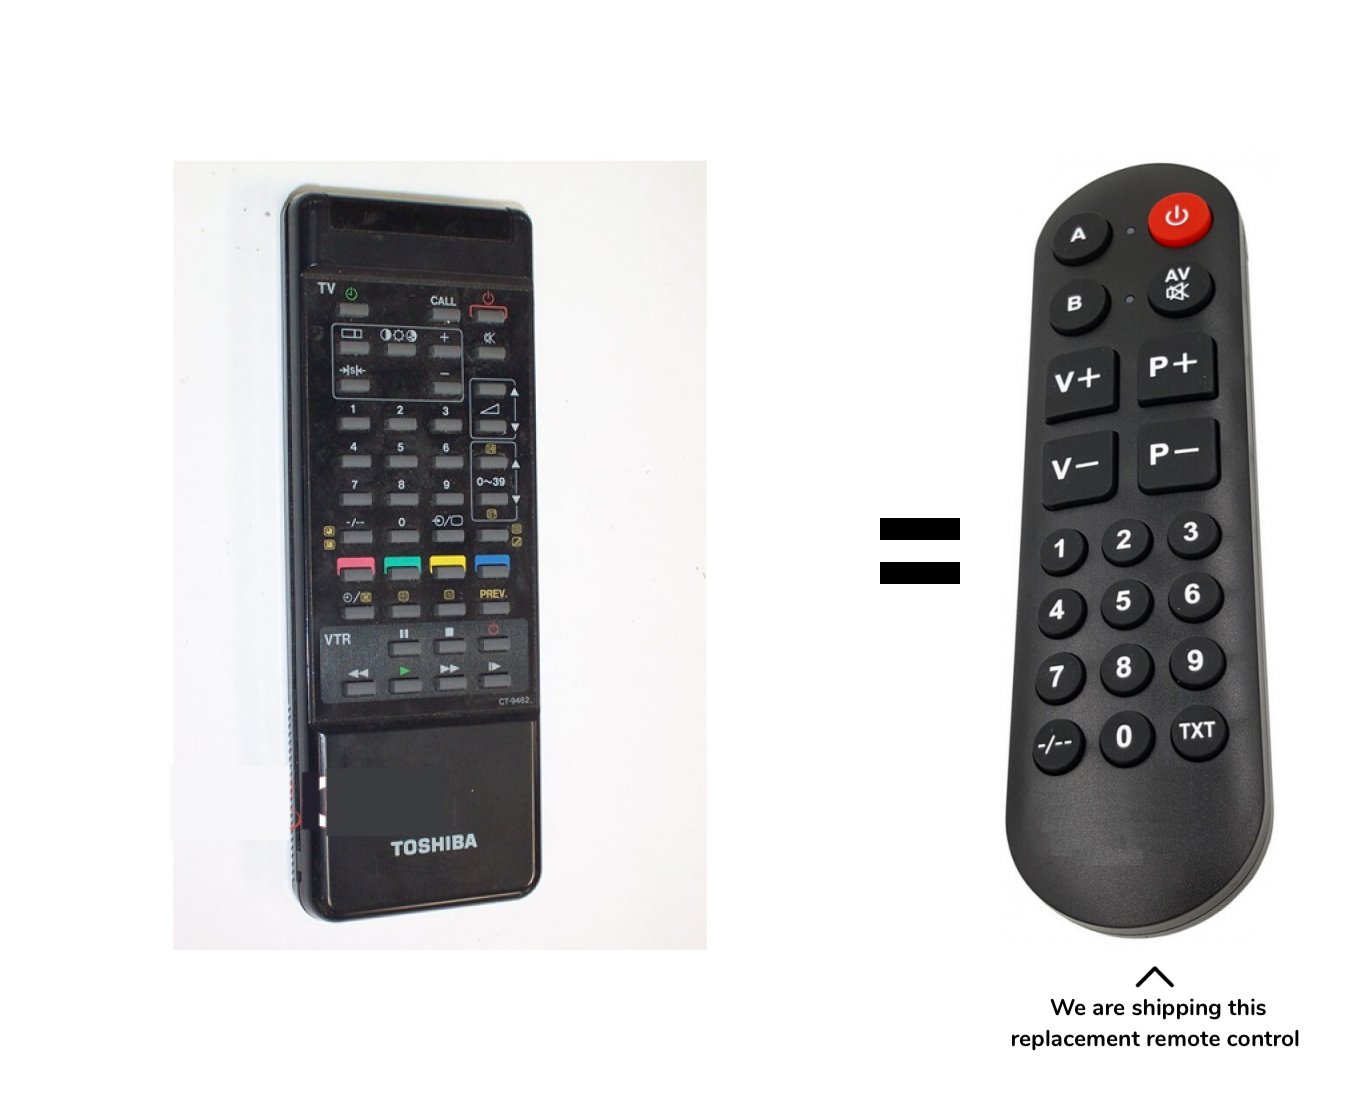 Toshiba 2031 remote control for seniors